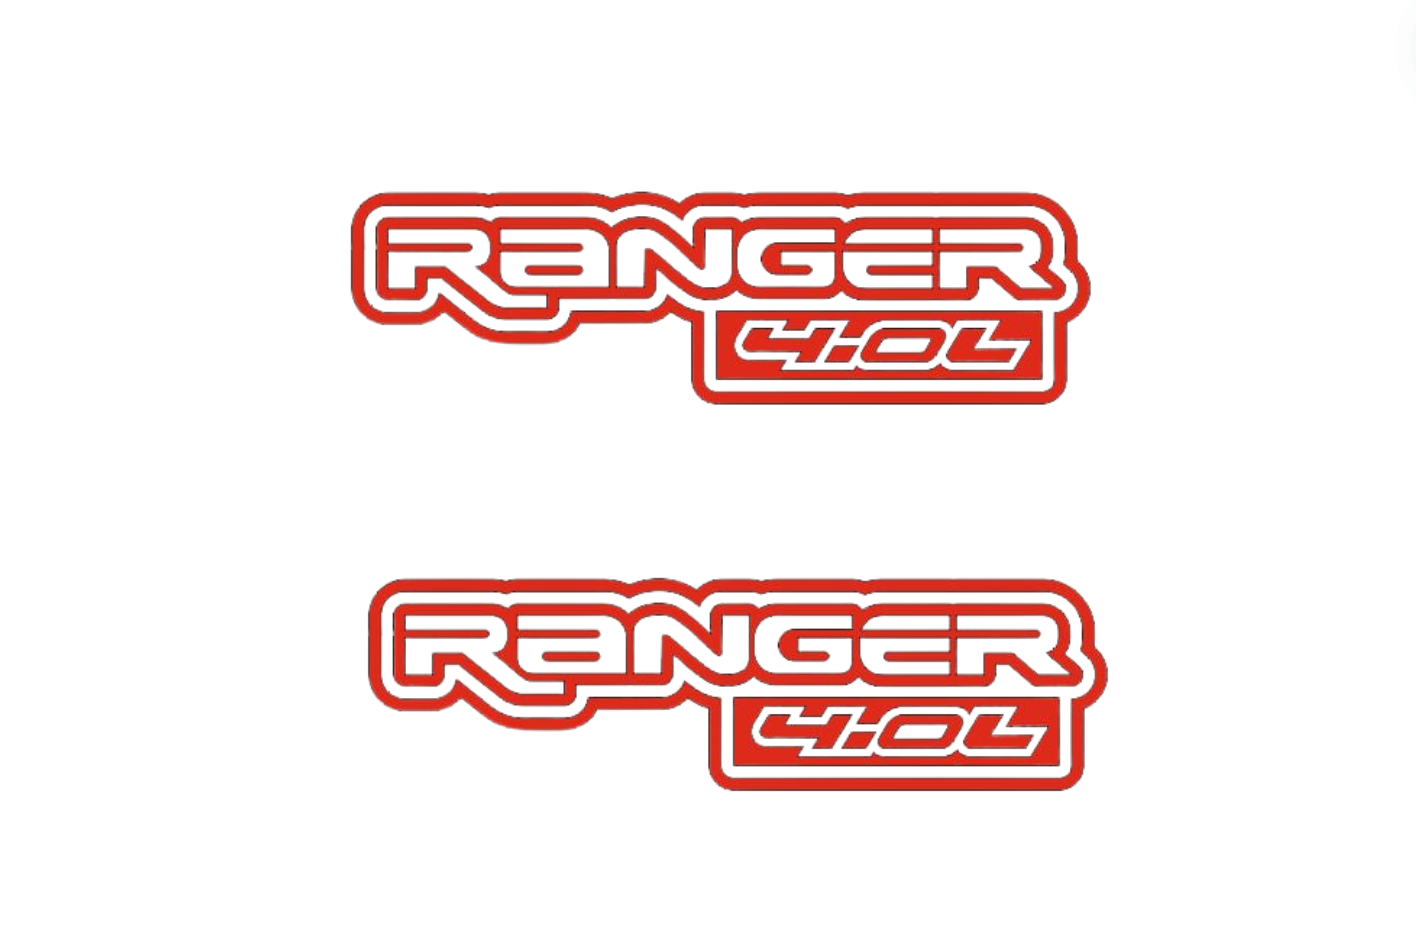 Ford Ranger emblem for fenders with Ranger 4.0L logo